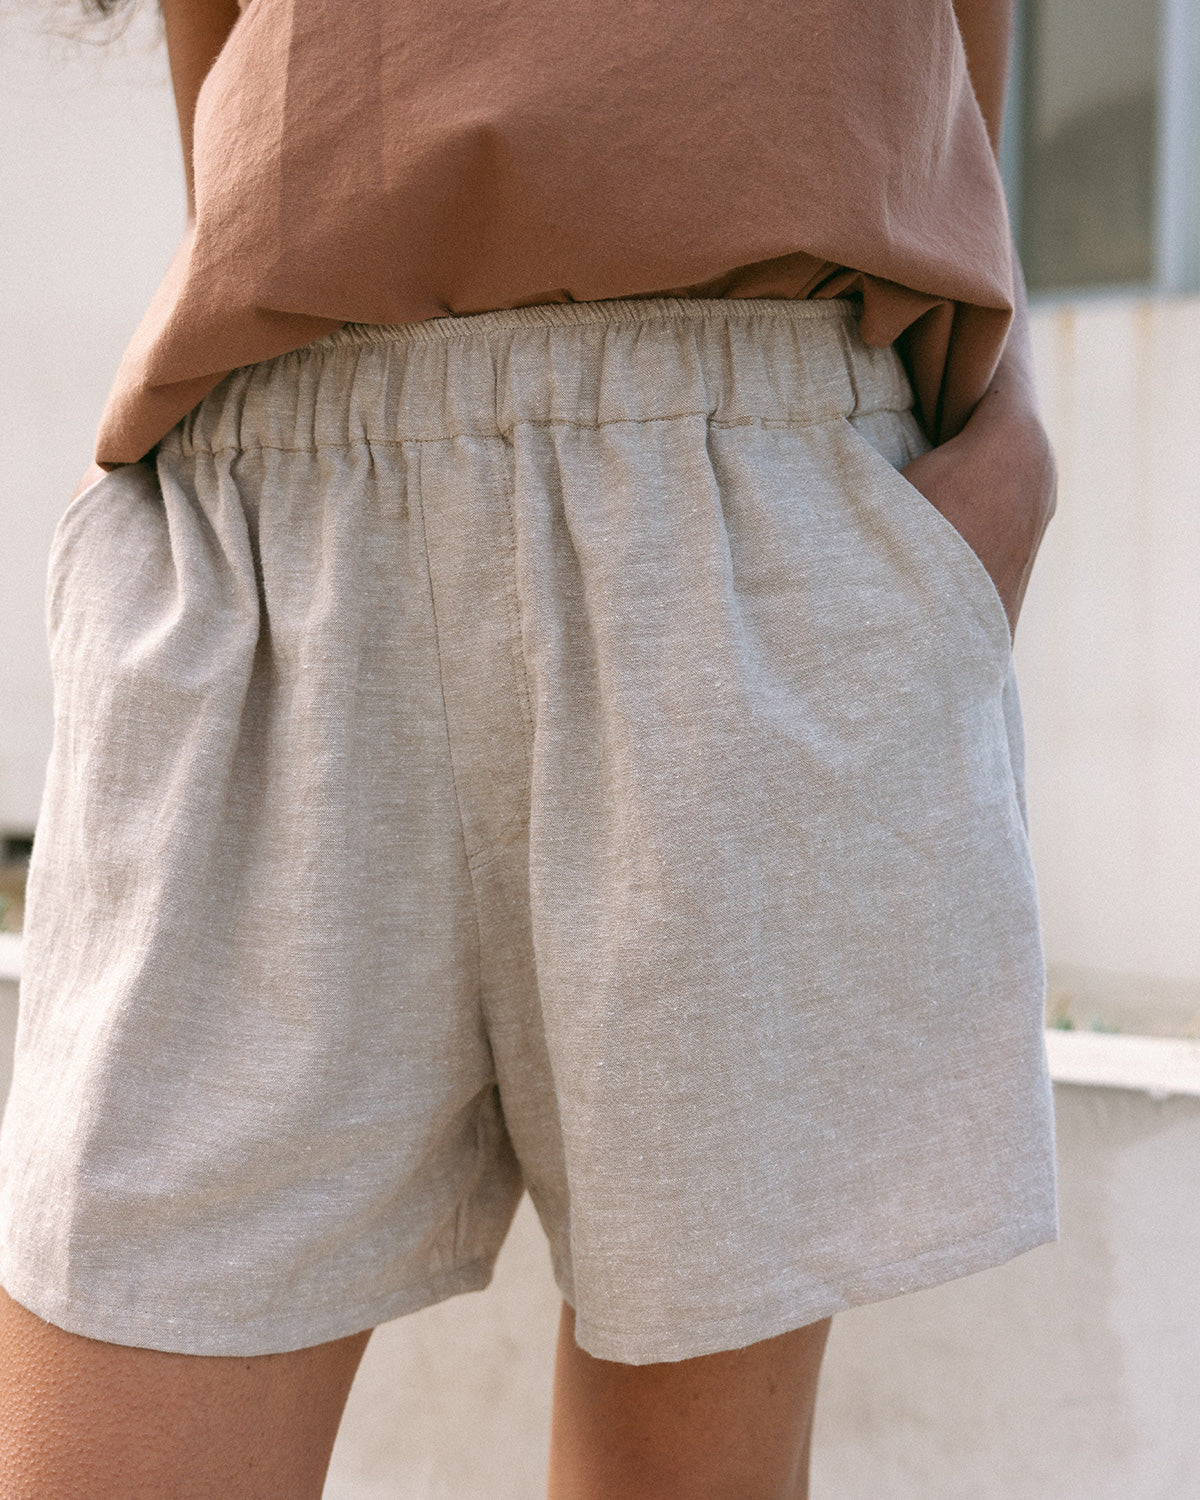 woven shorts